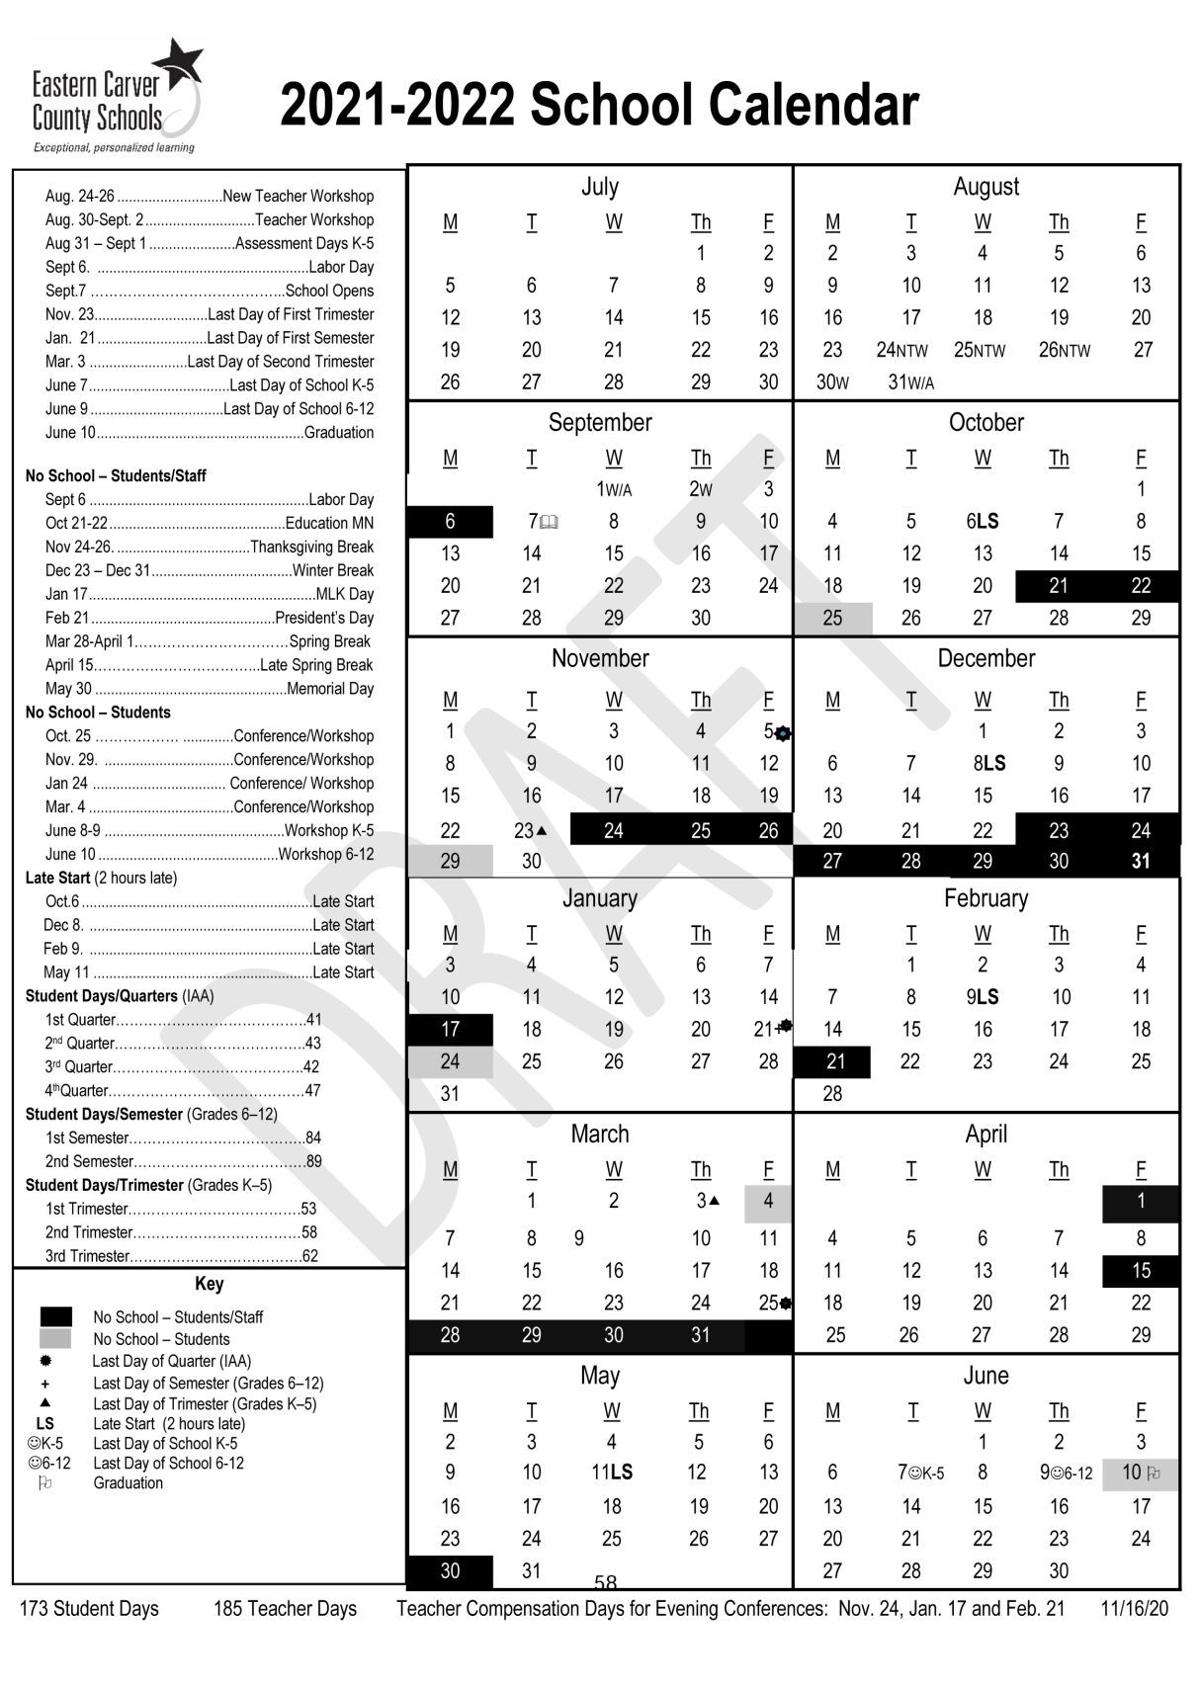 cuw-2022-23-academic-calendar-june-2022-calendar